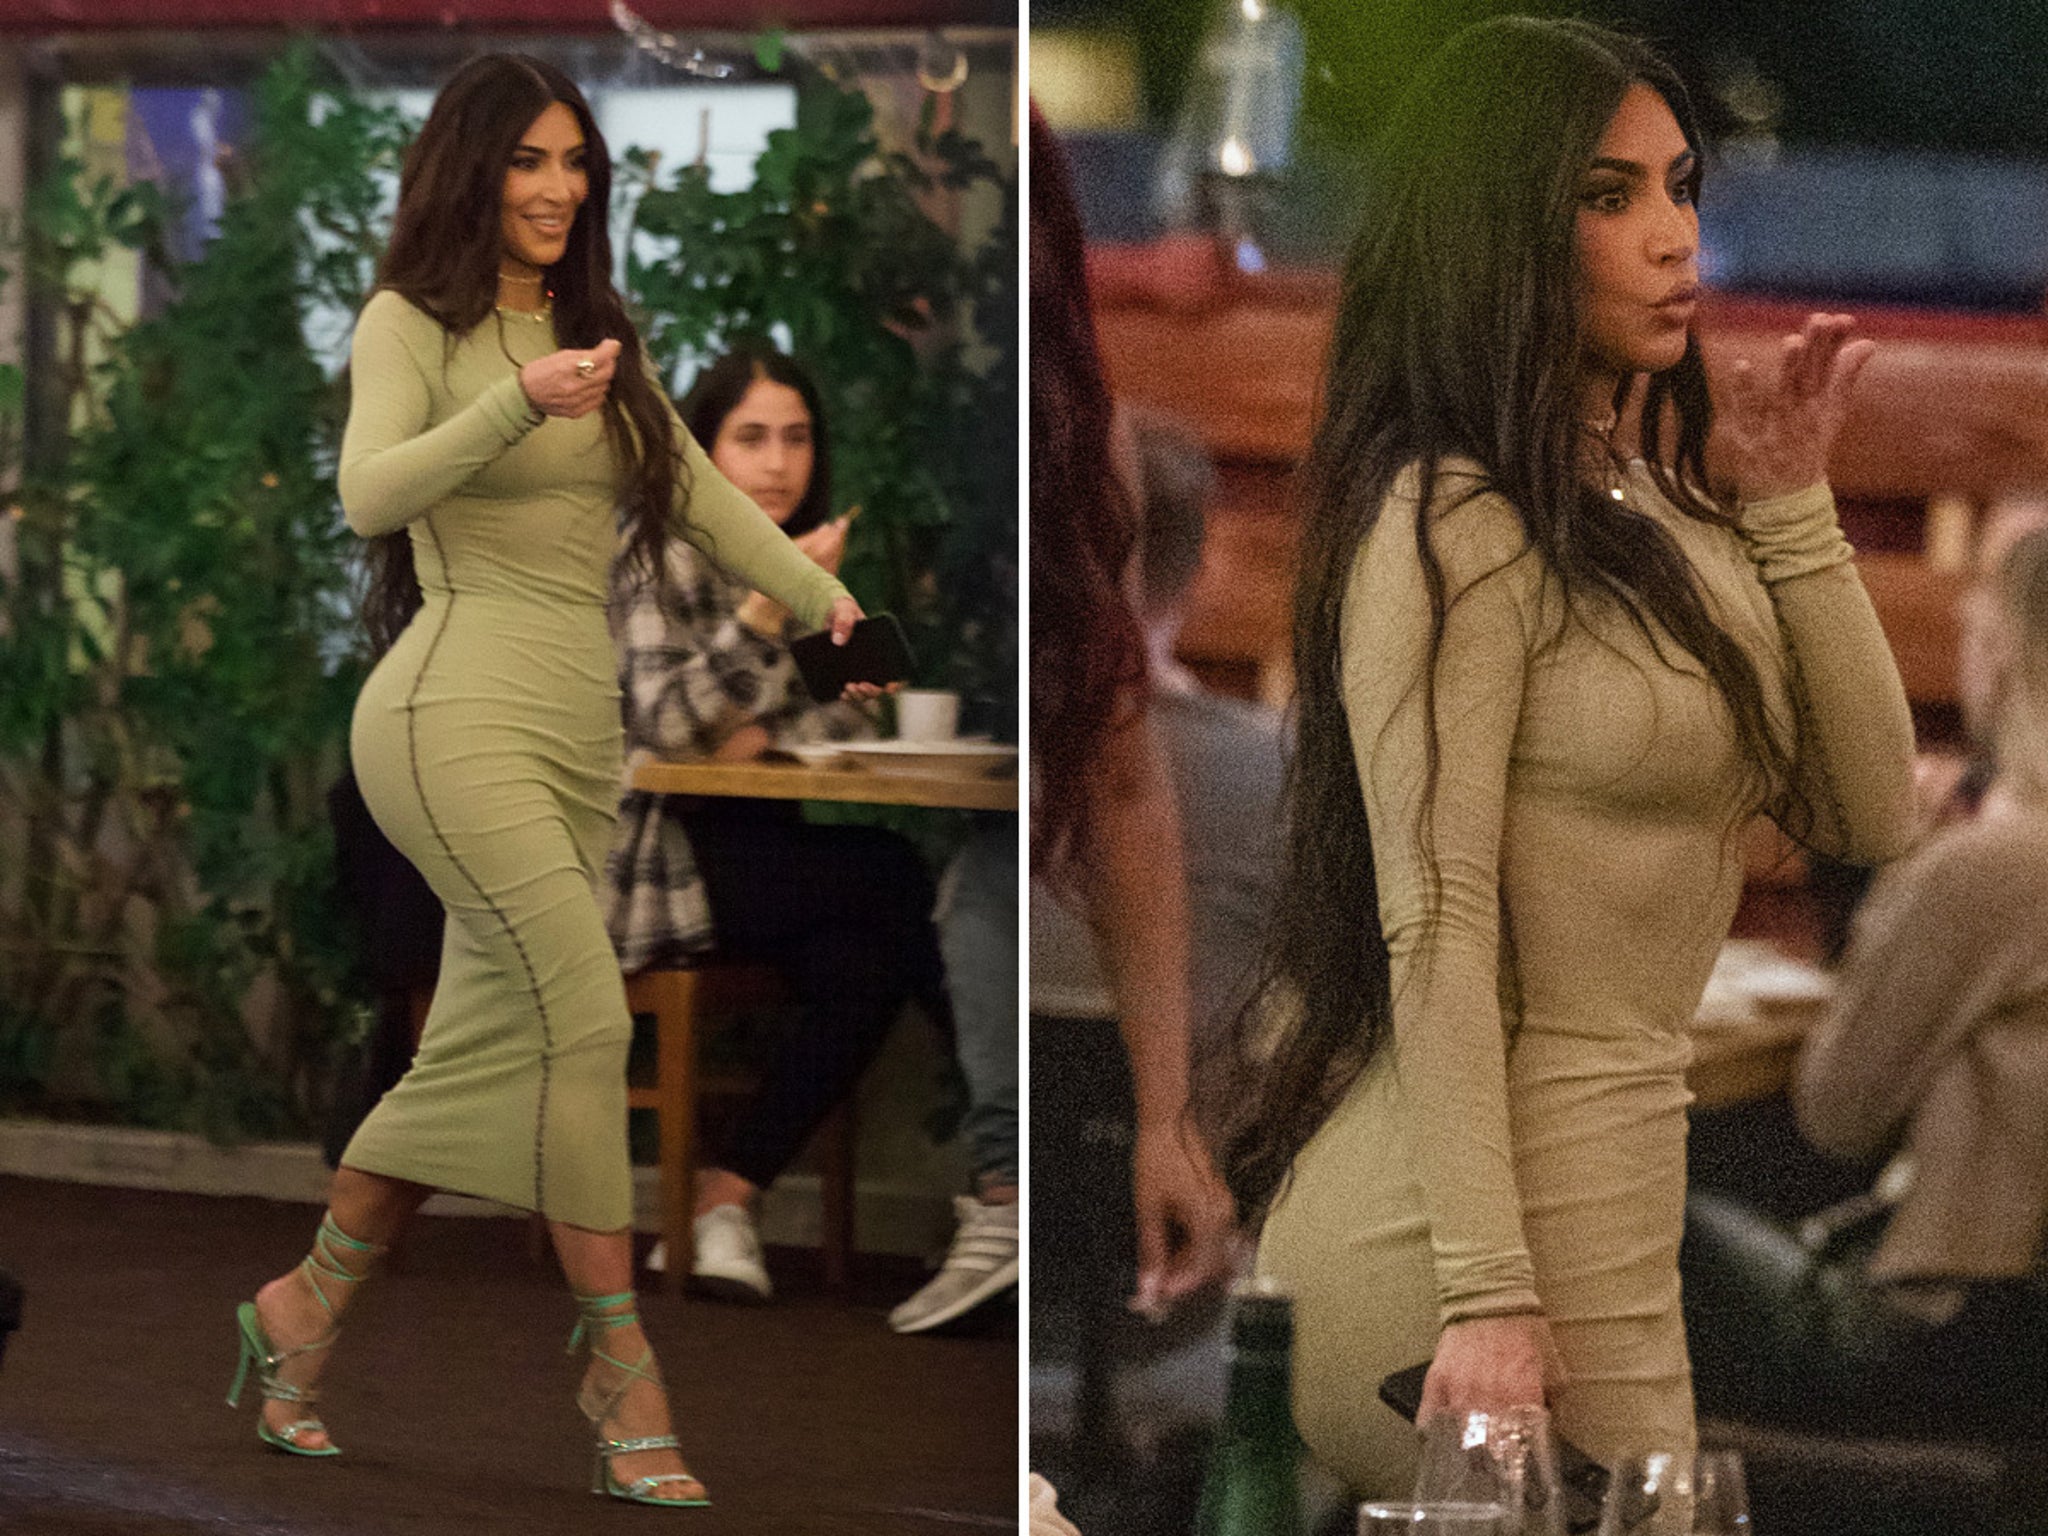 Bittersweet after an amazing 12 years': Kim Kardashian confirms